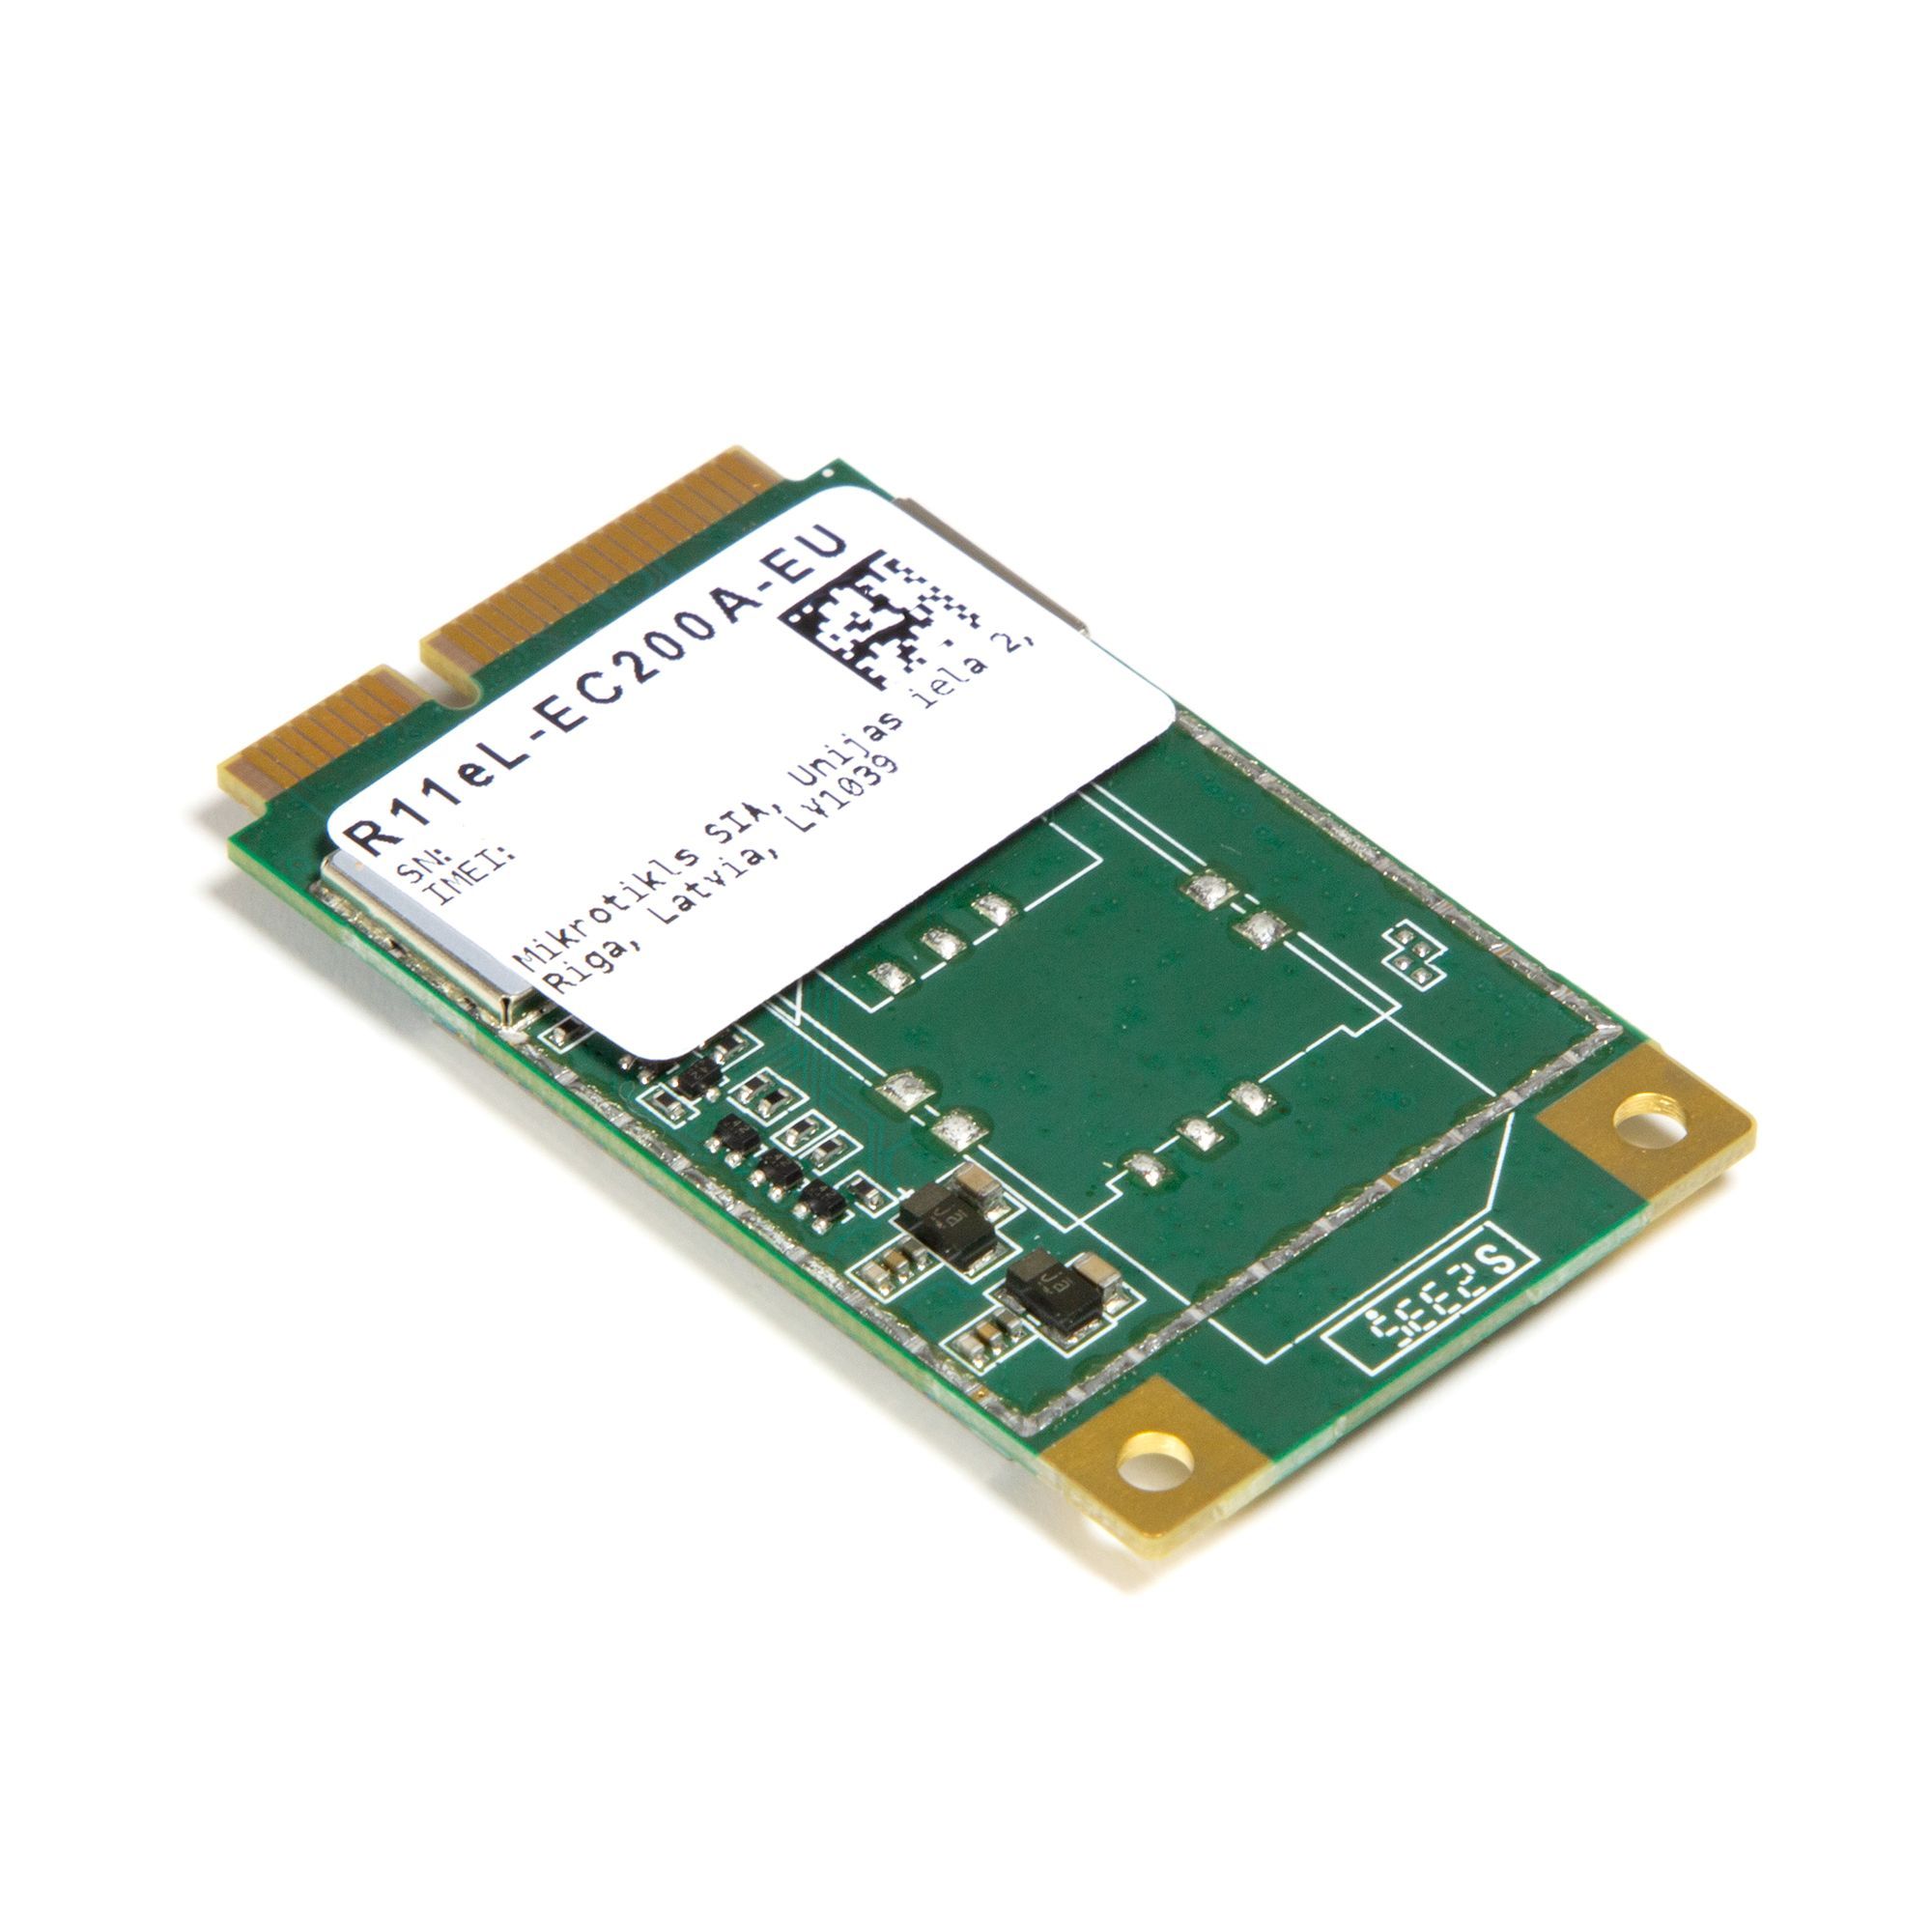 MikroTik 2G/3G/4G/LTE miniPCi-e card with 2 x u.FL connectors for International bands 1/3/5/7/8/20/28/38/40/41, CAT4_1